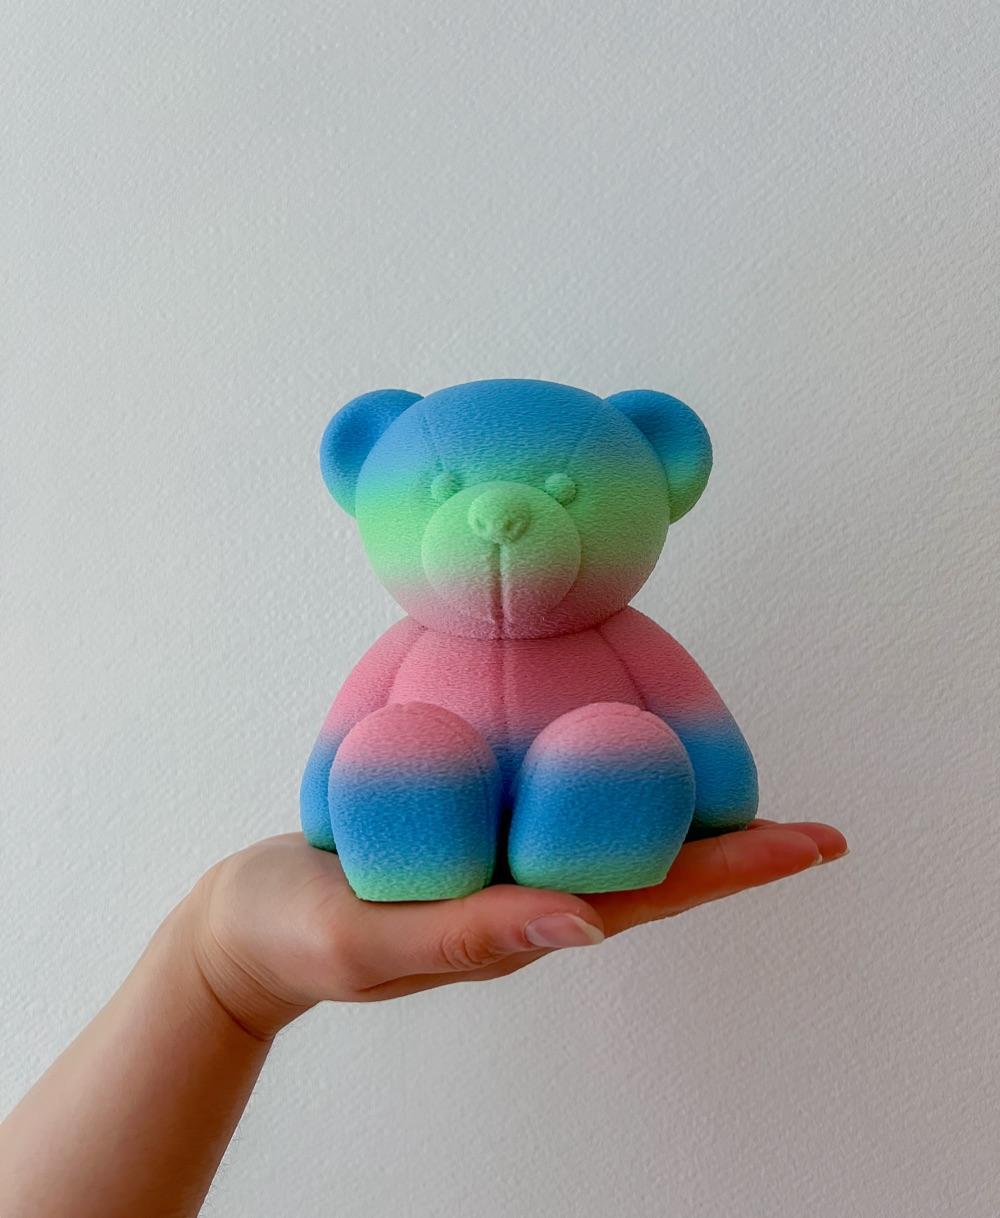 Barry Bear - 150% size in fuzzy skin!
Isanmate rainbow filament. - 3d model